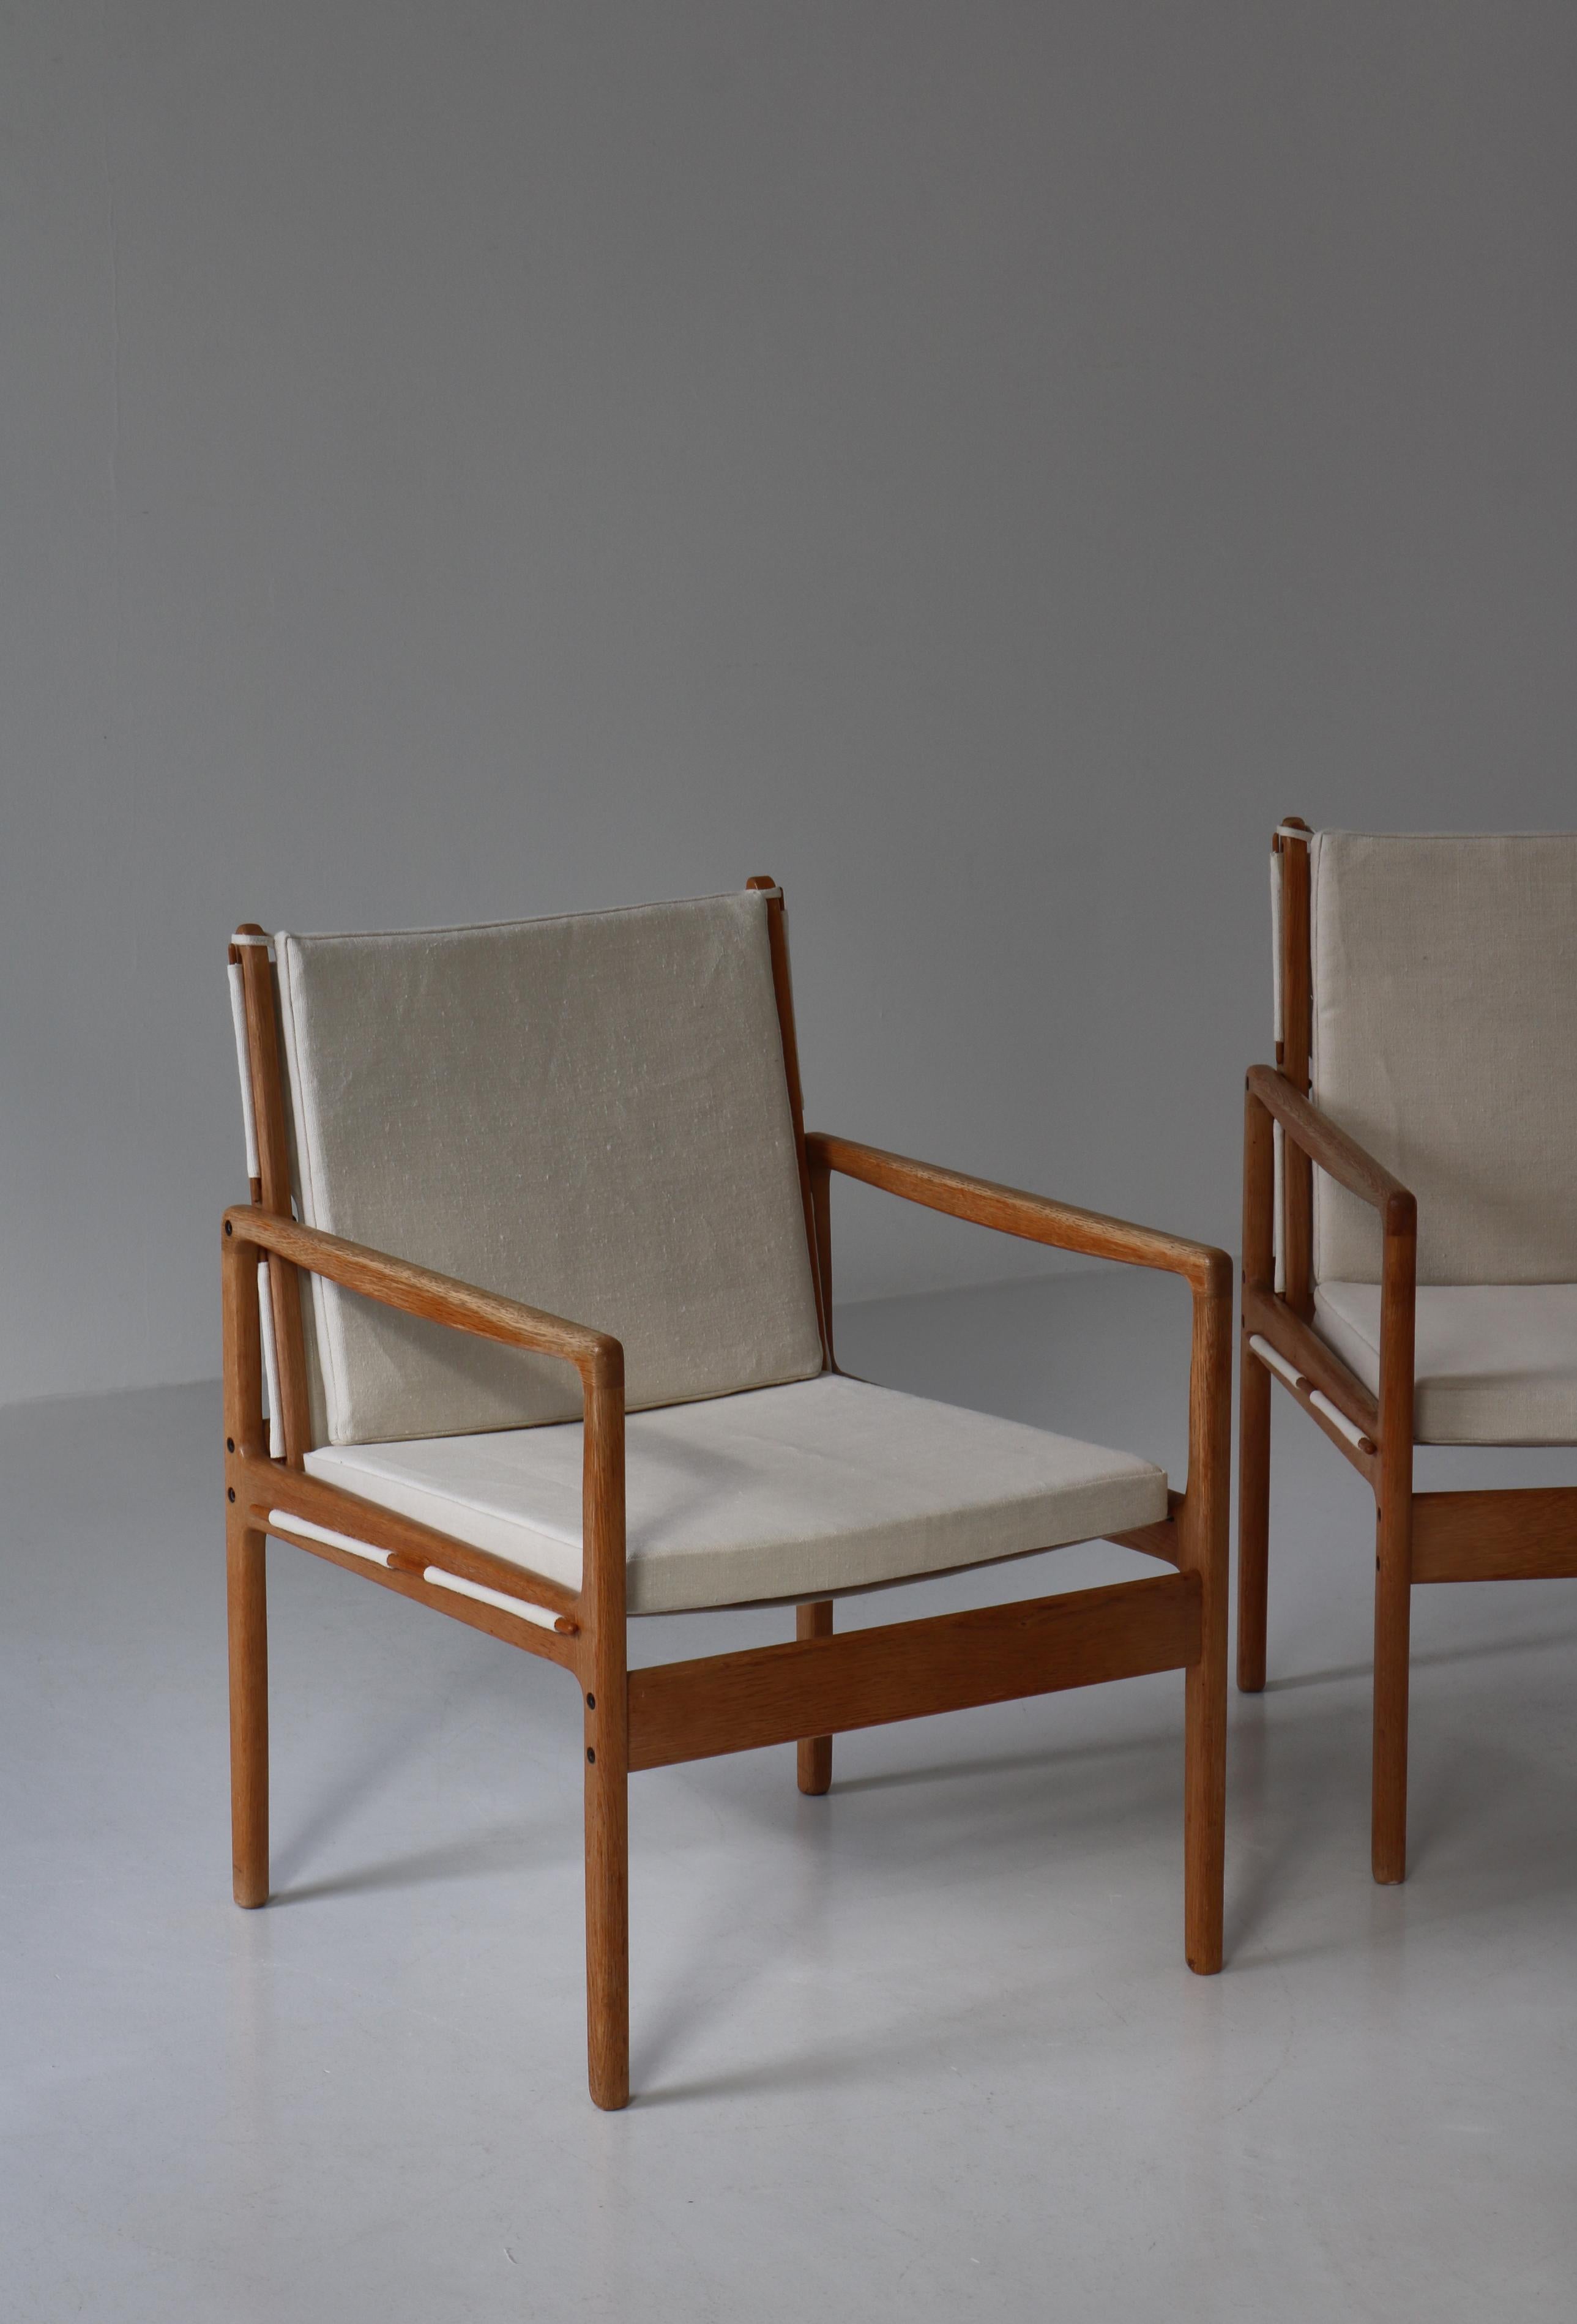 Mid-20th Century Ole Wanscher Safari Chairs in Oak & Light Canvas, Scandinavian Modern, 1960s For Sale